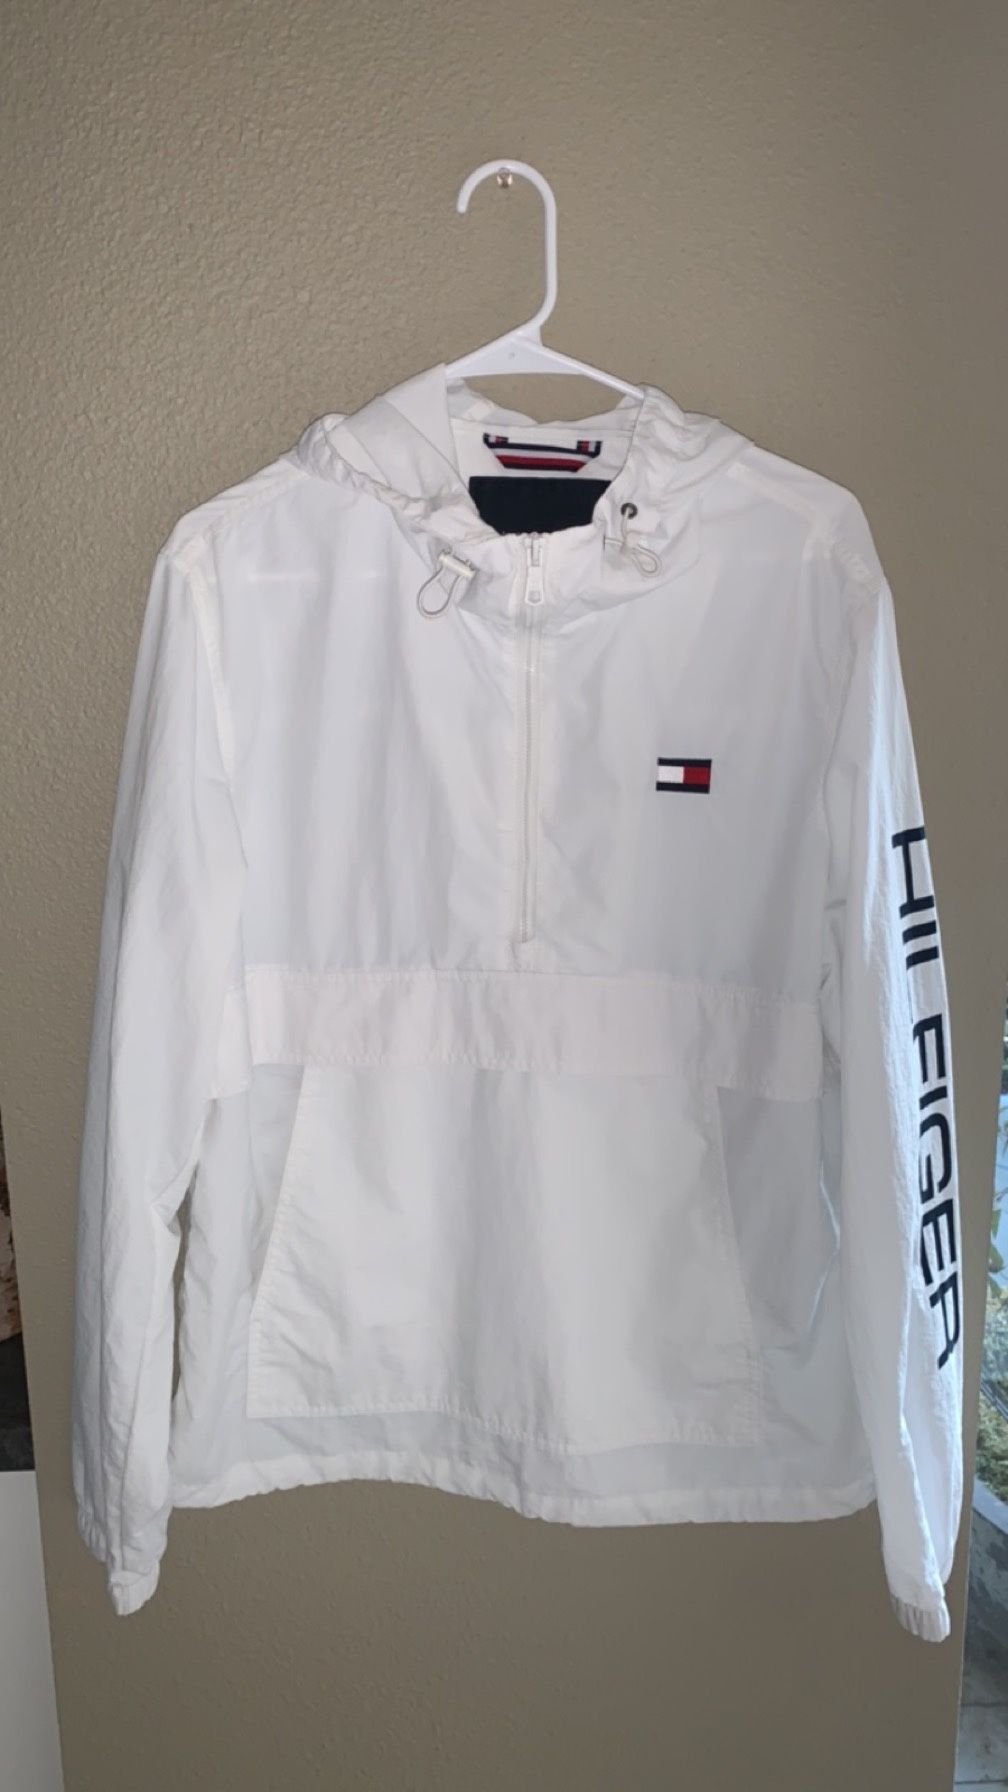 Tommy Hilfiger Water Resistant Windbreaker Jacket (SZ MEDIUM)